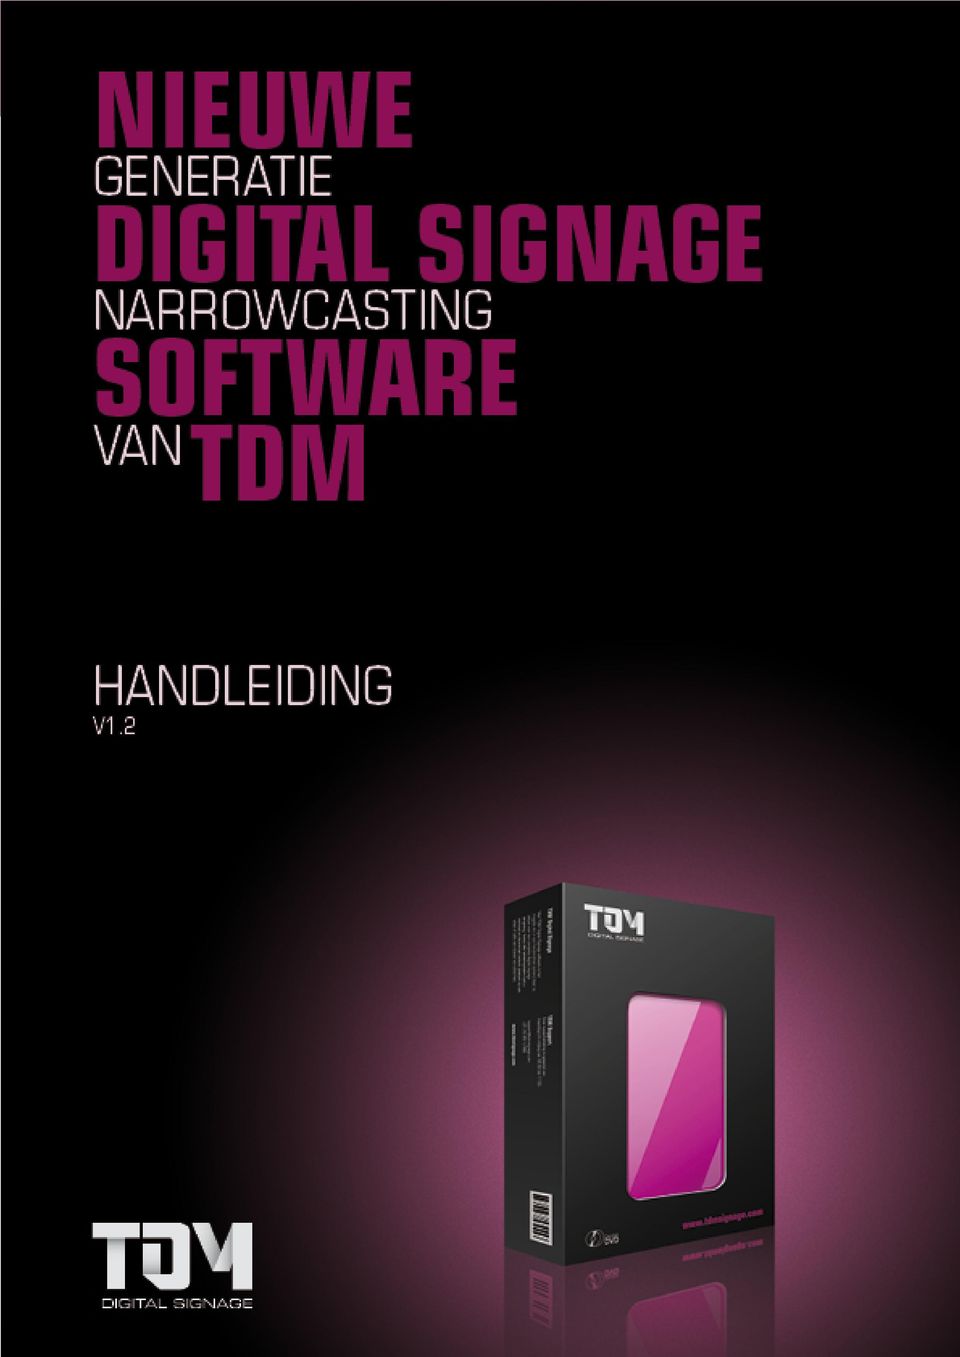 TDM Digital